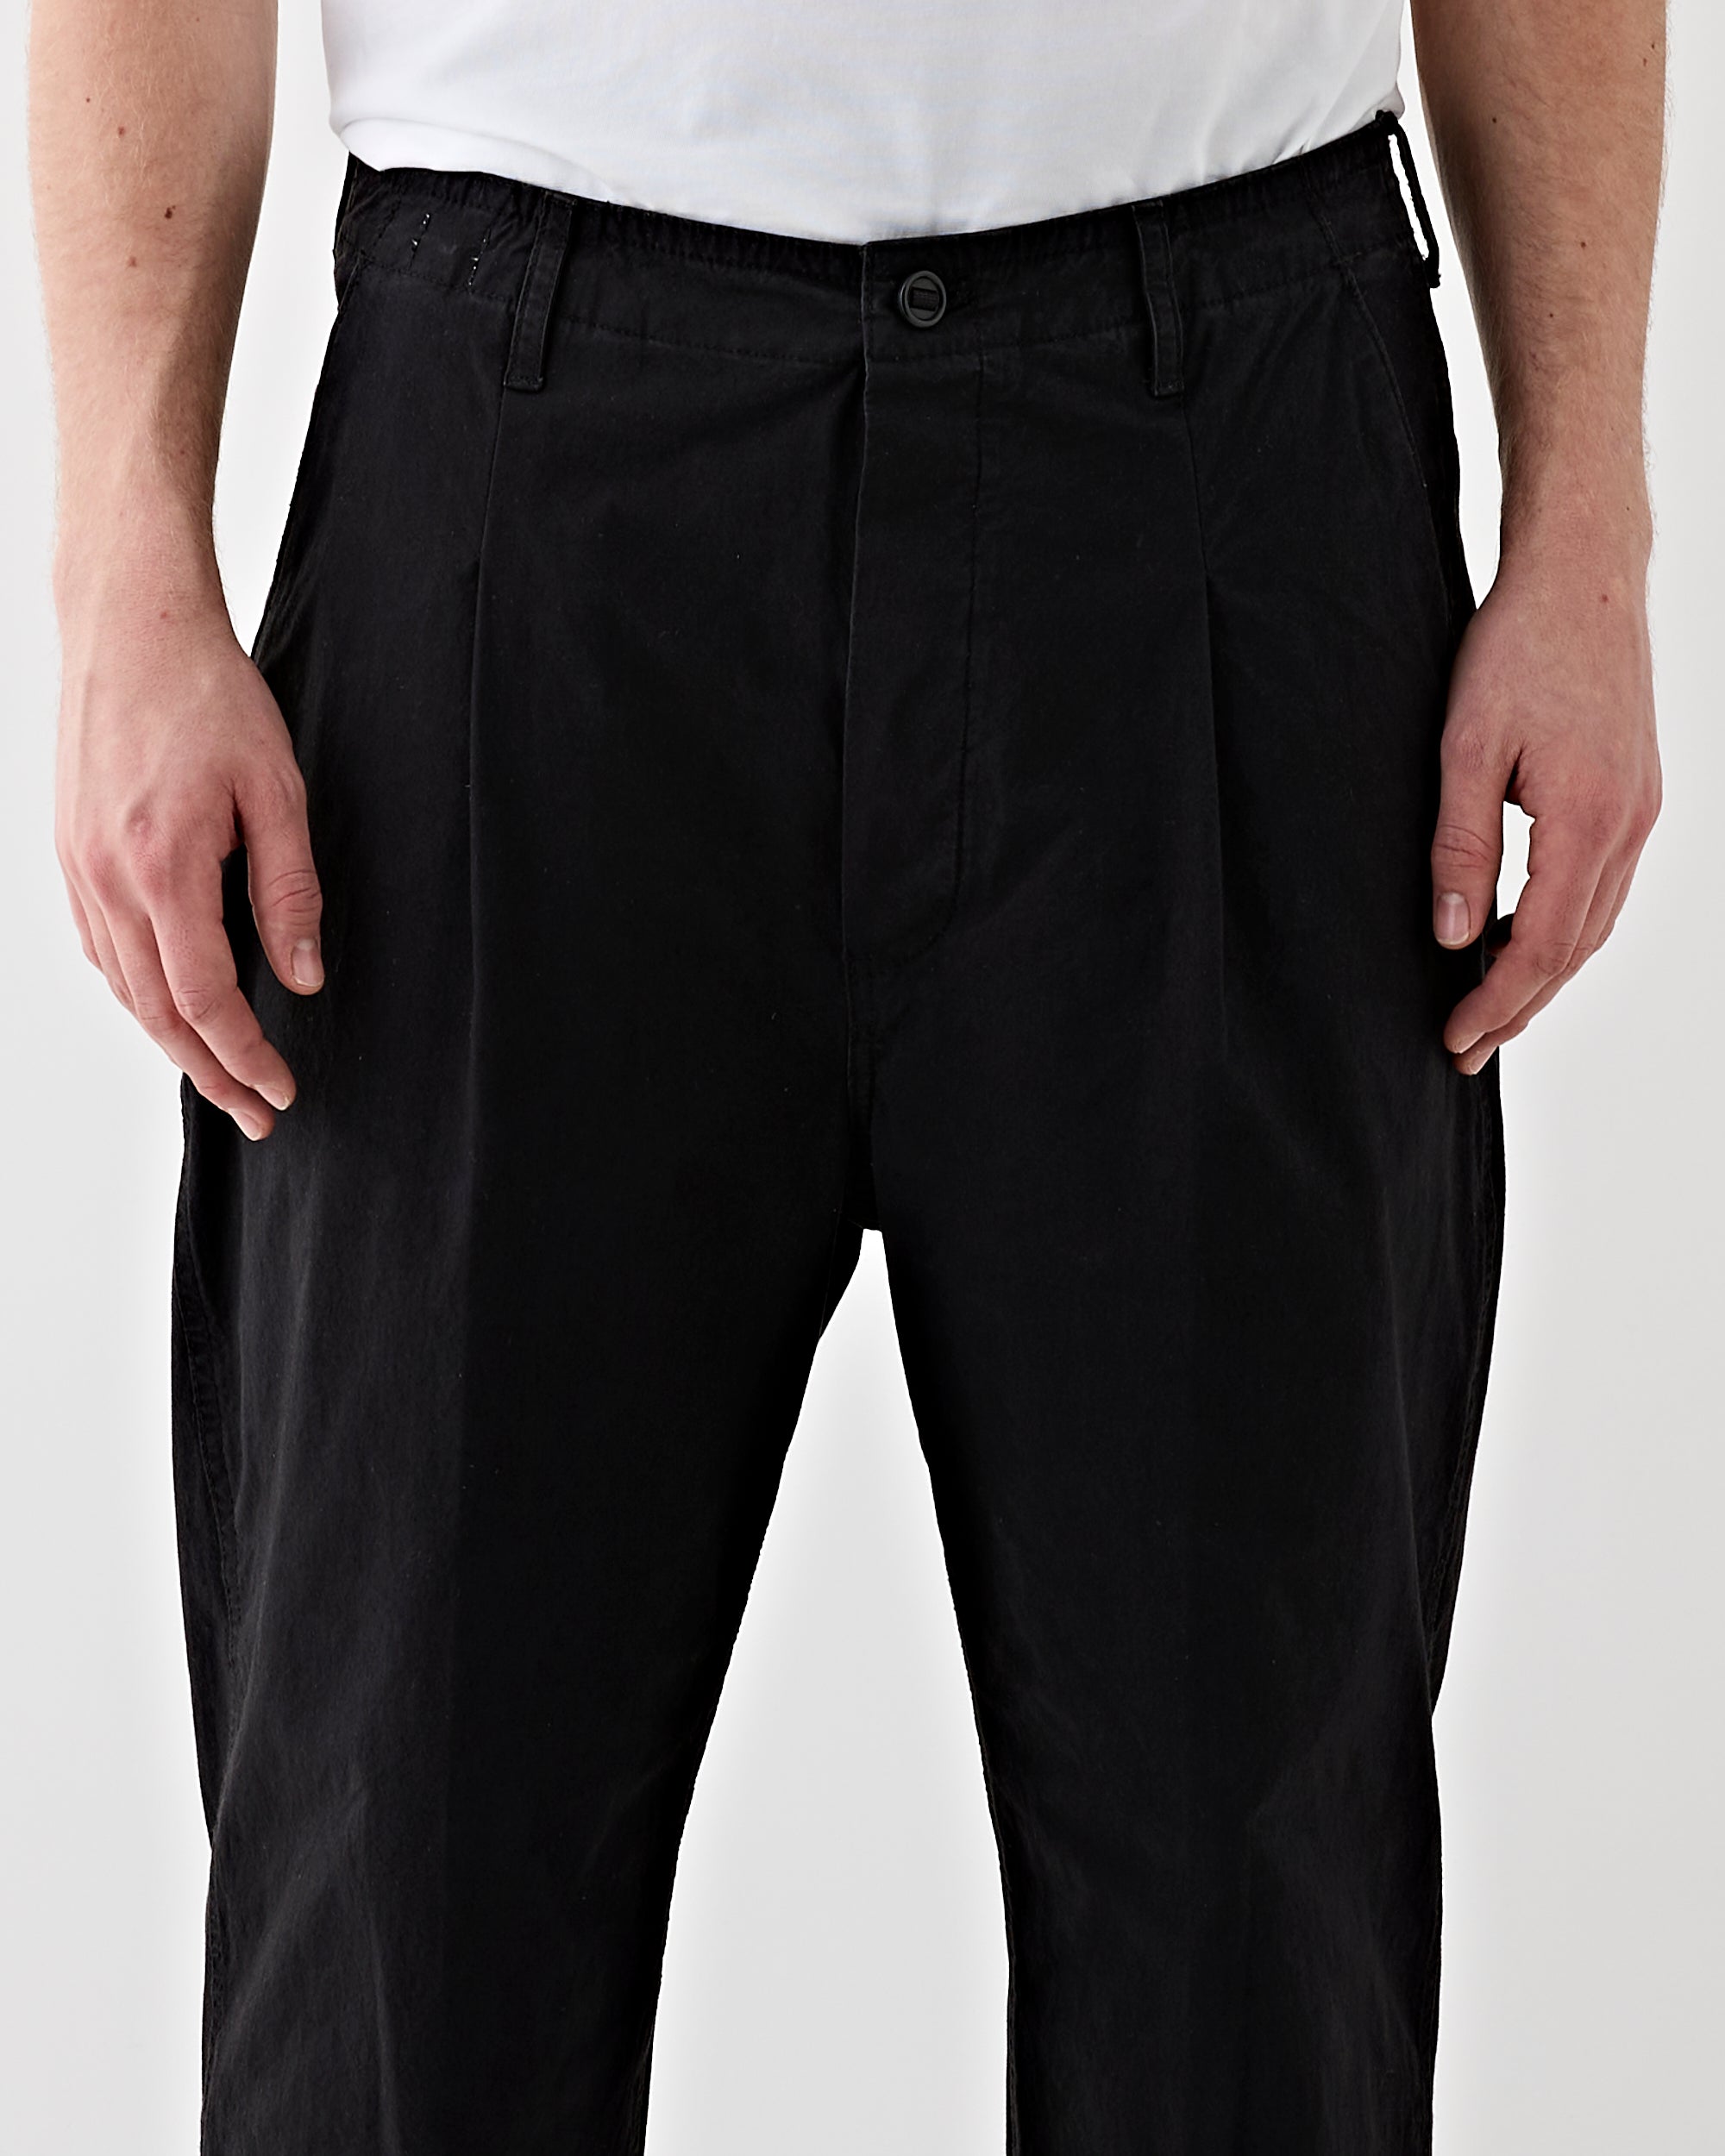 Applied Art Forms DM1-1 Japanese Cargo Black Pants Men